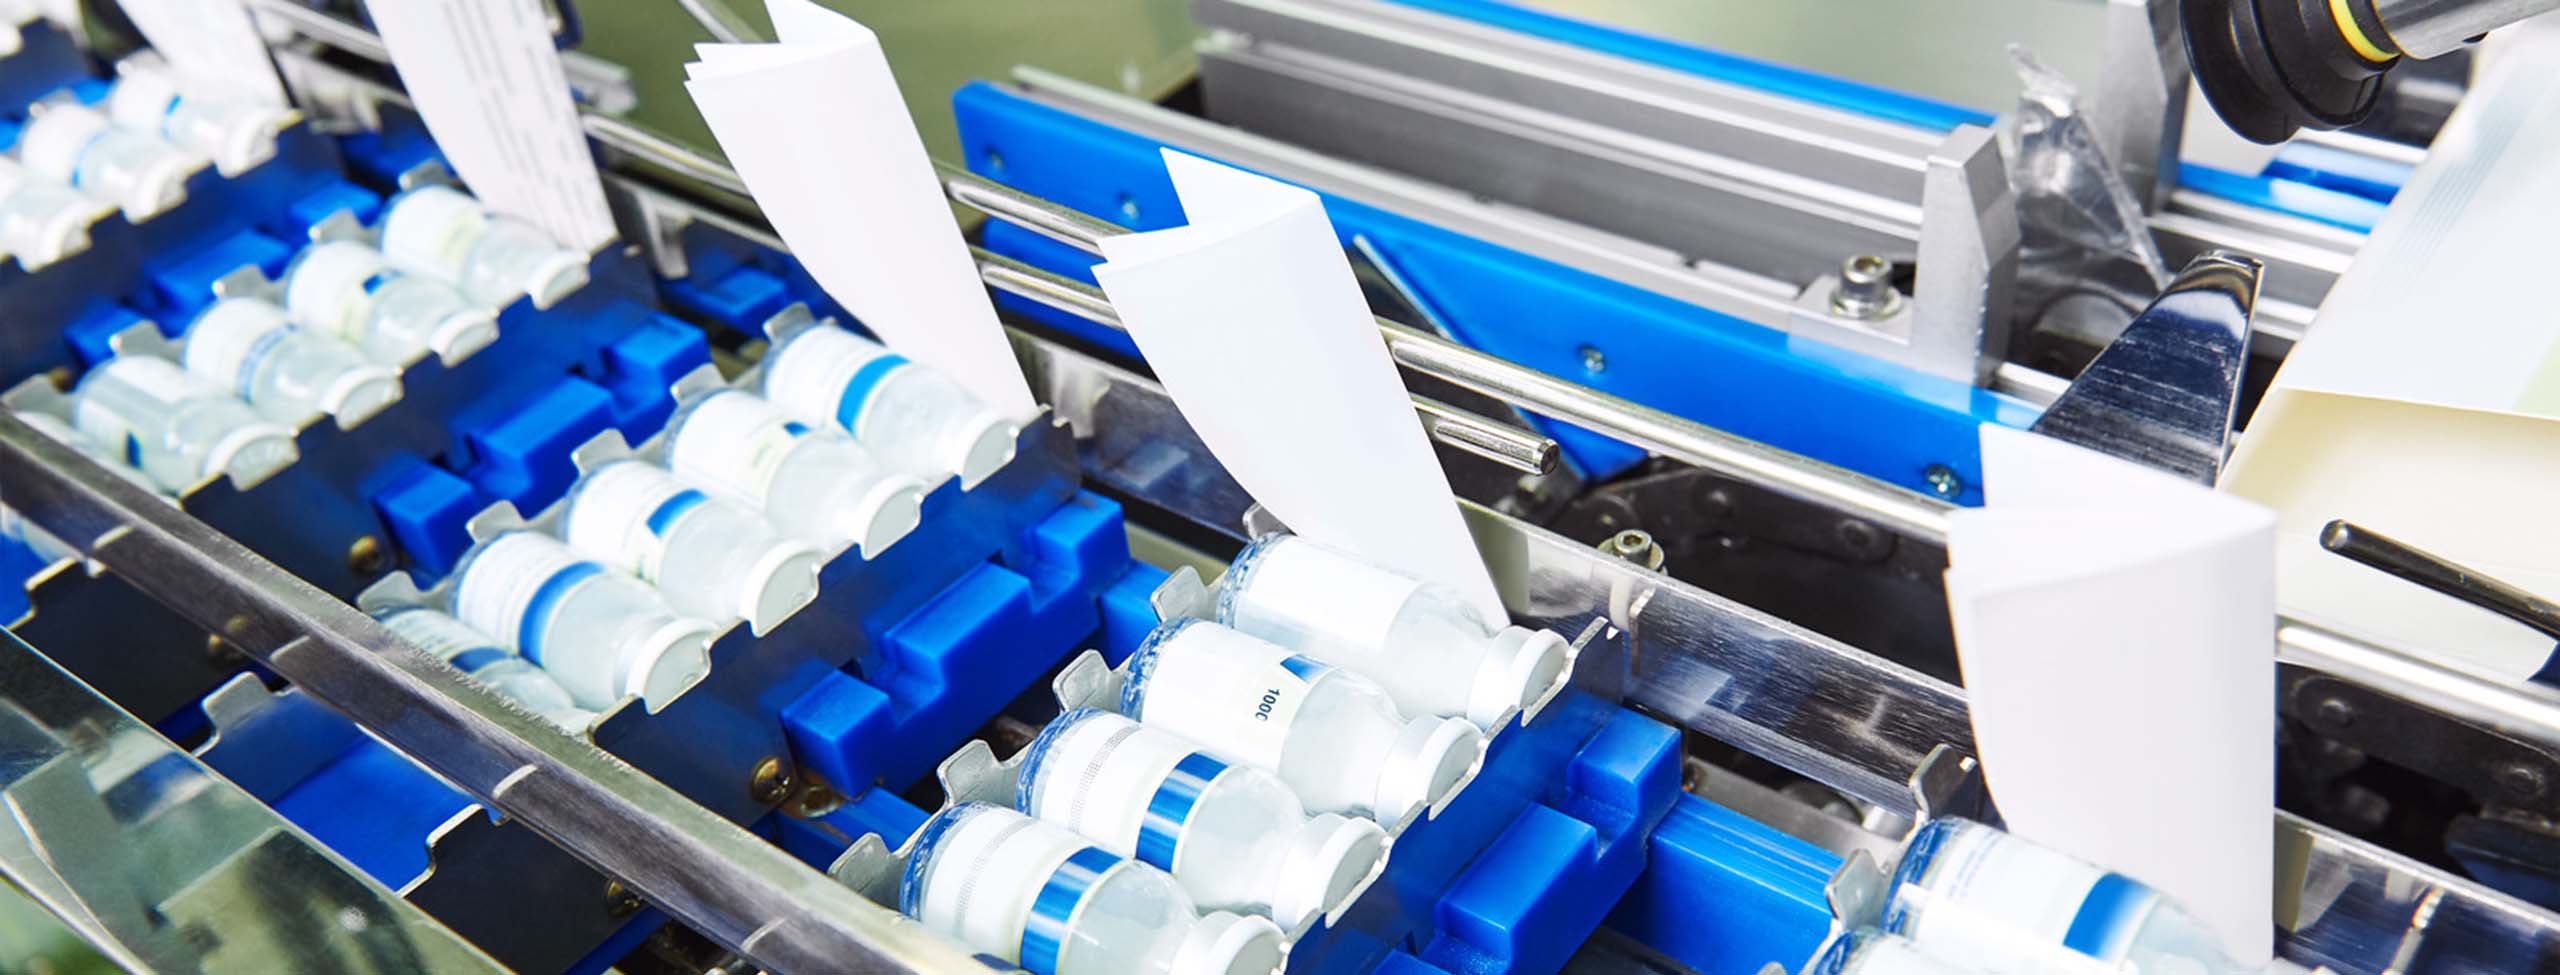 Medicine manufacturing vials